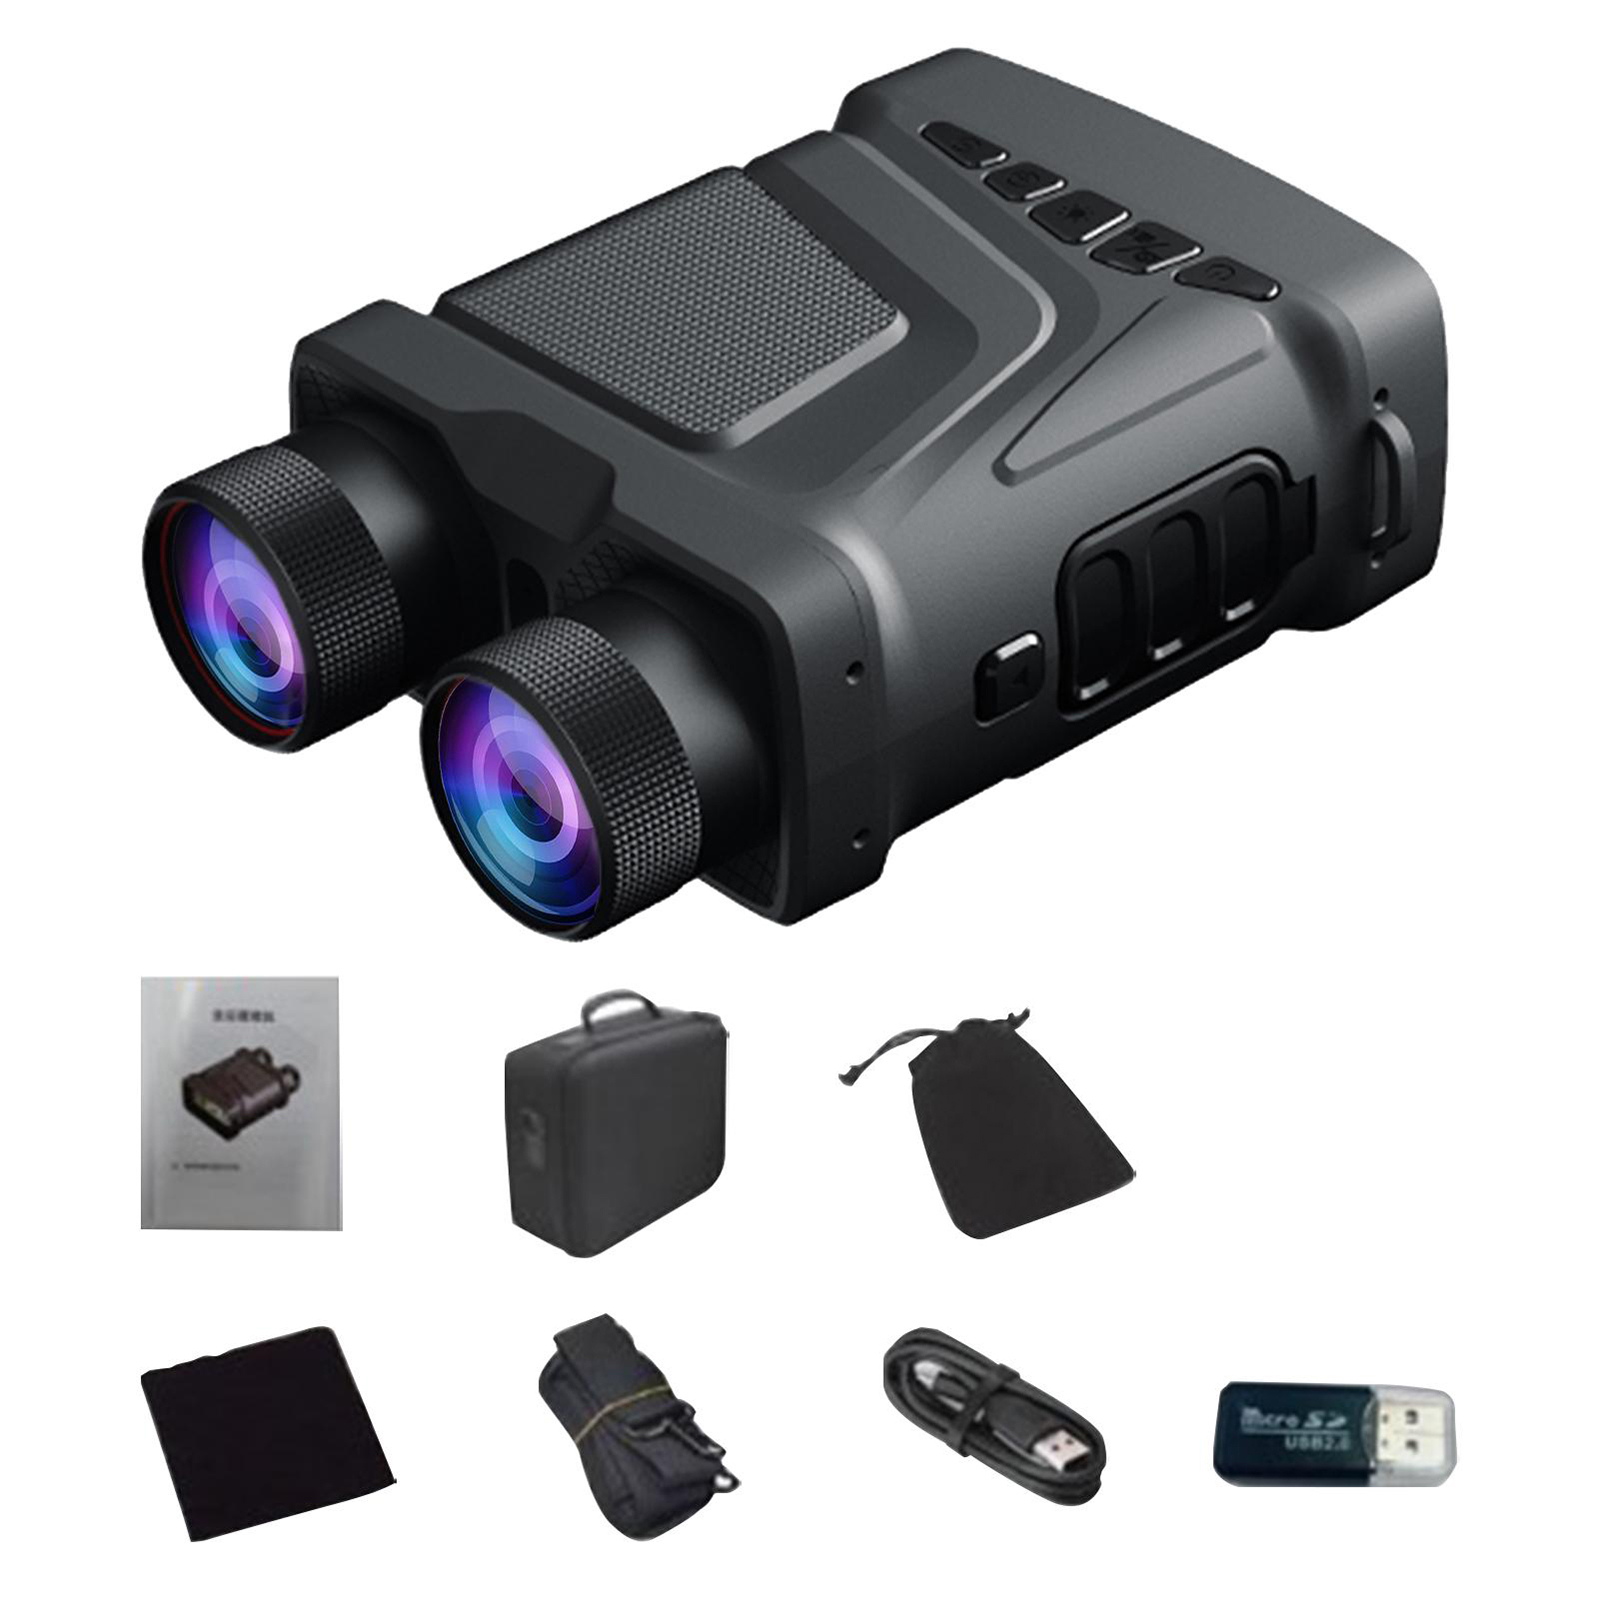 N002 Night Vision Goggles 4k Infrared Digital Binoculars Full Color HD Visible